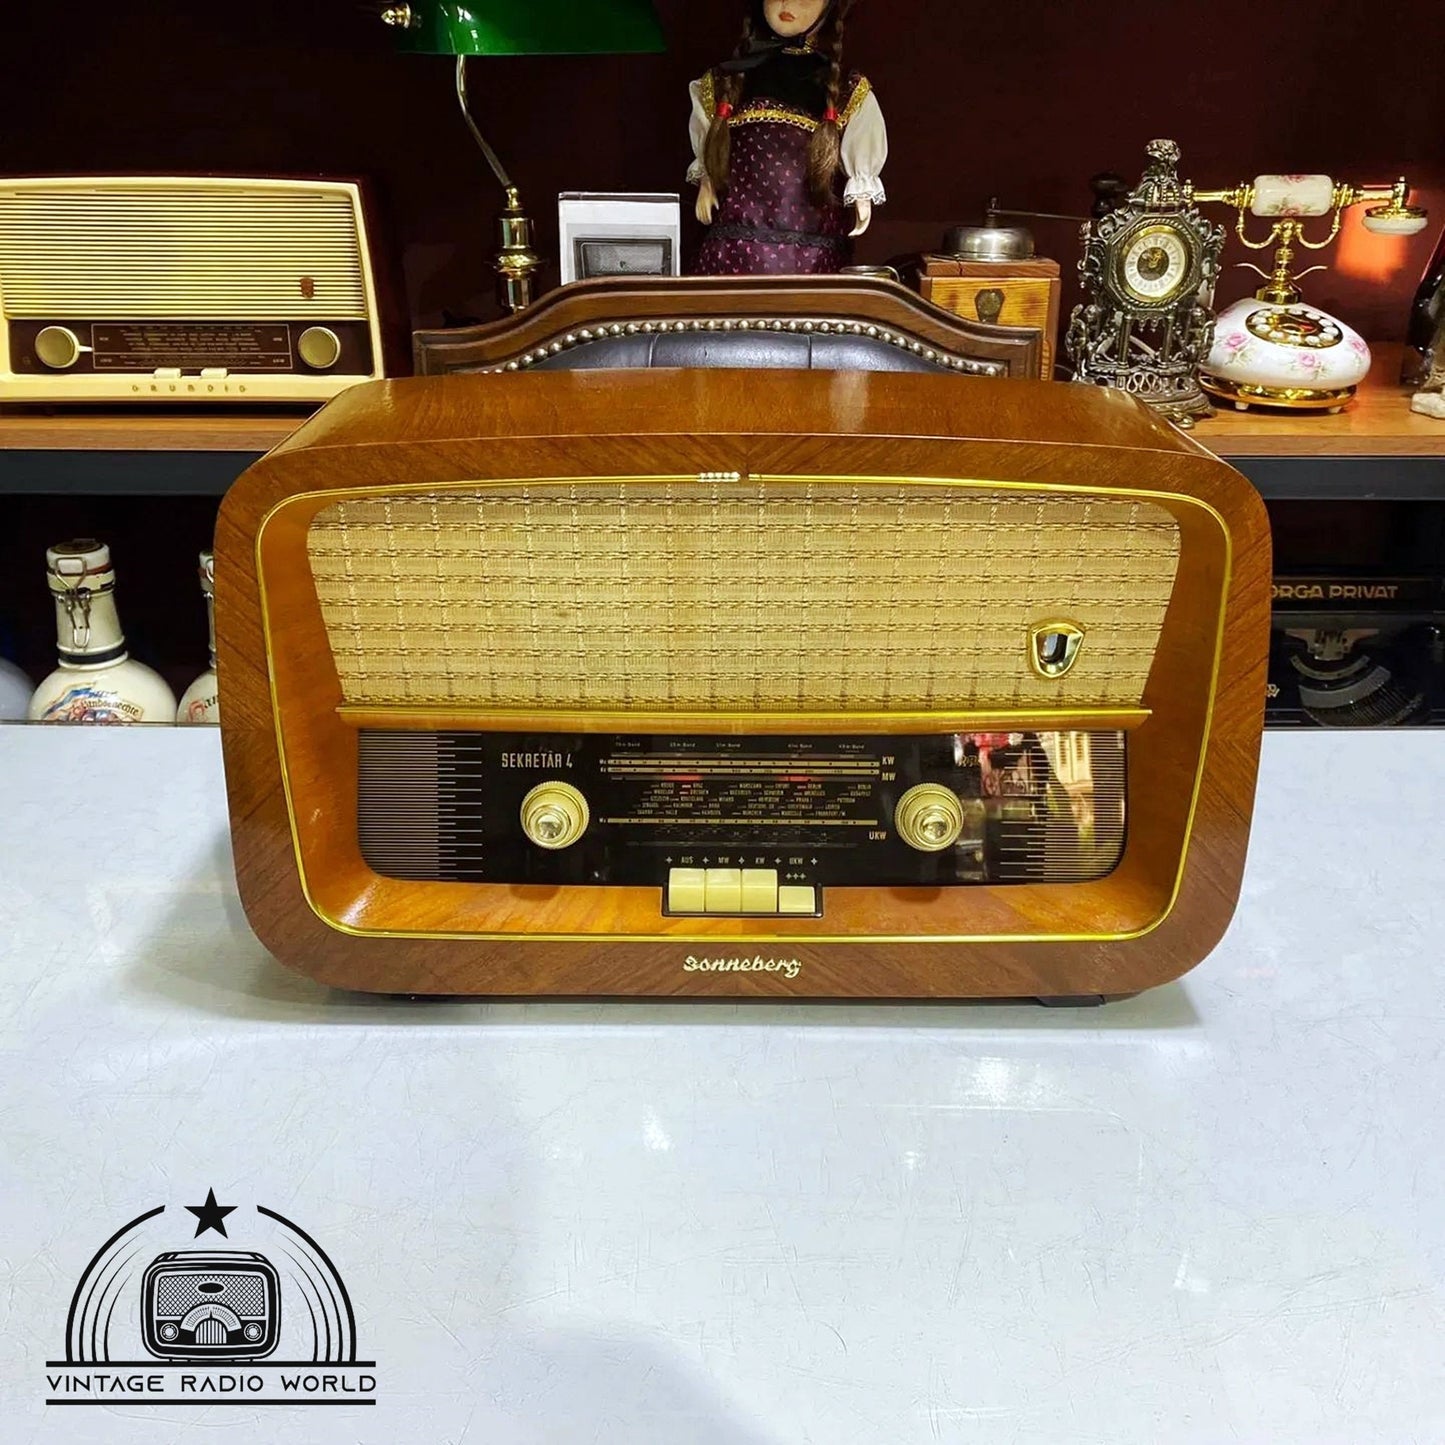 Soneberg 697 Radio - Authentic Vintage, Original Classic, Lamp Radio - Rediscover Nostalgia with Soneberg 697